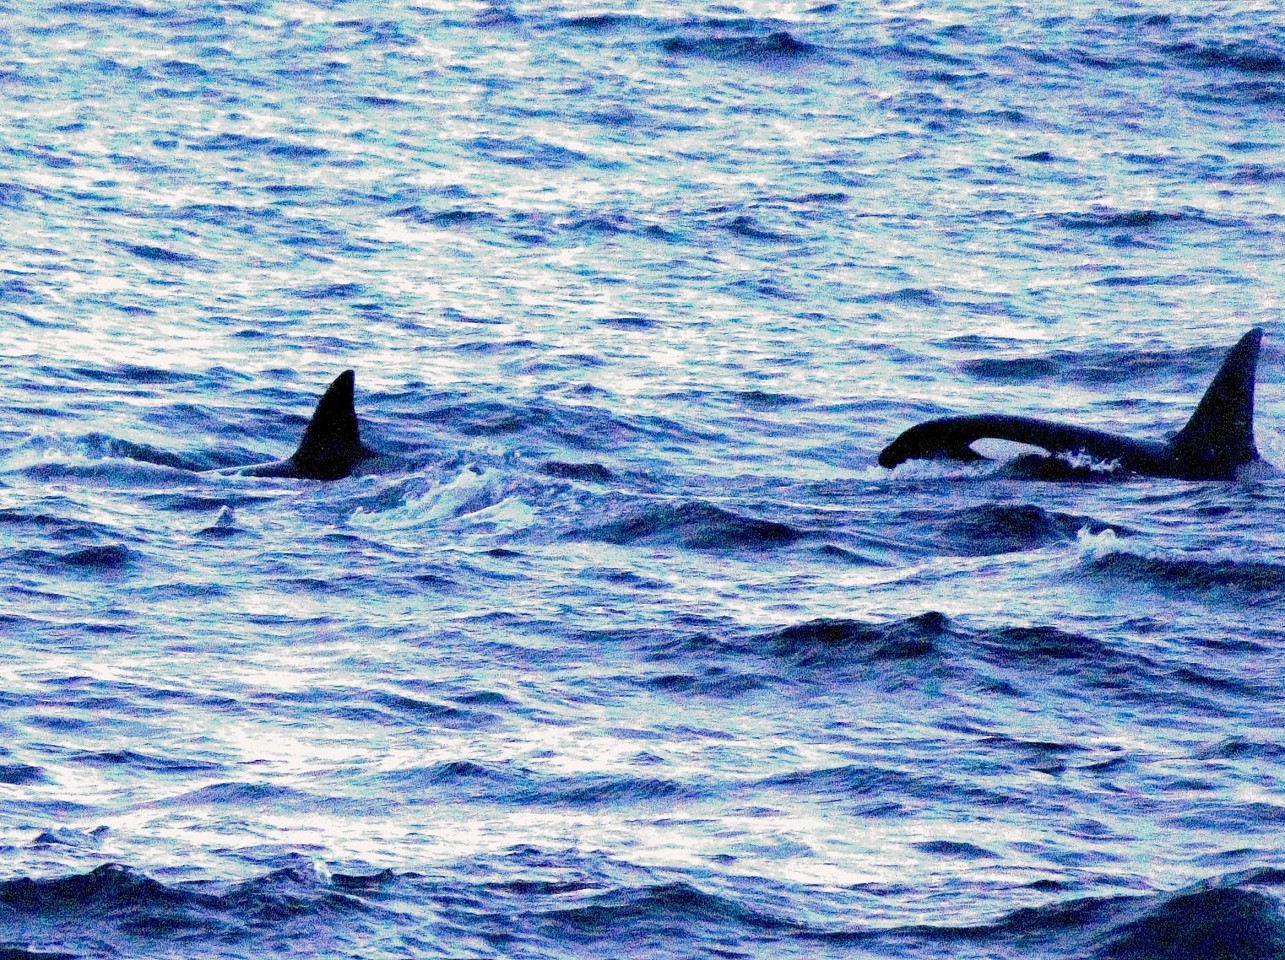 Killer whales off North East coast. David Beedie